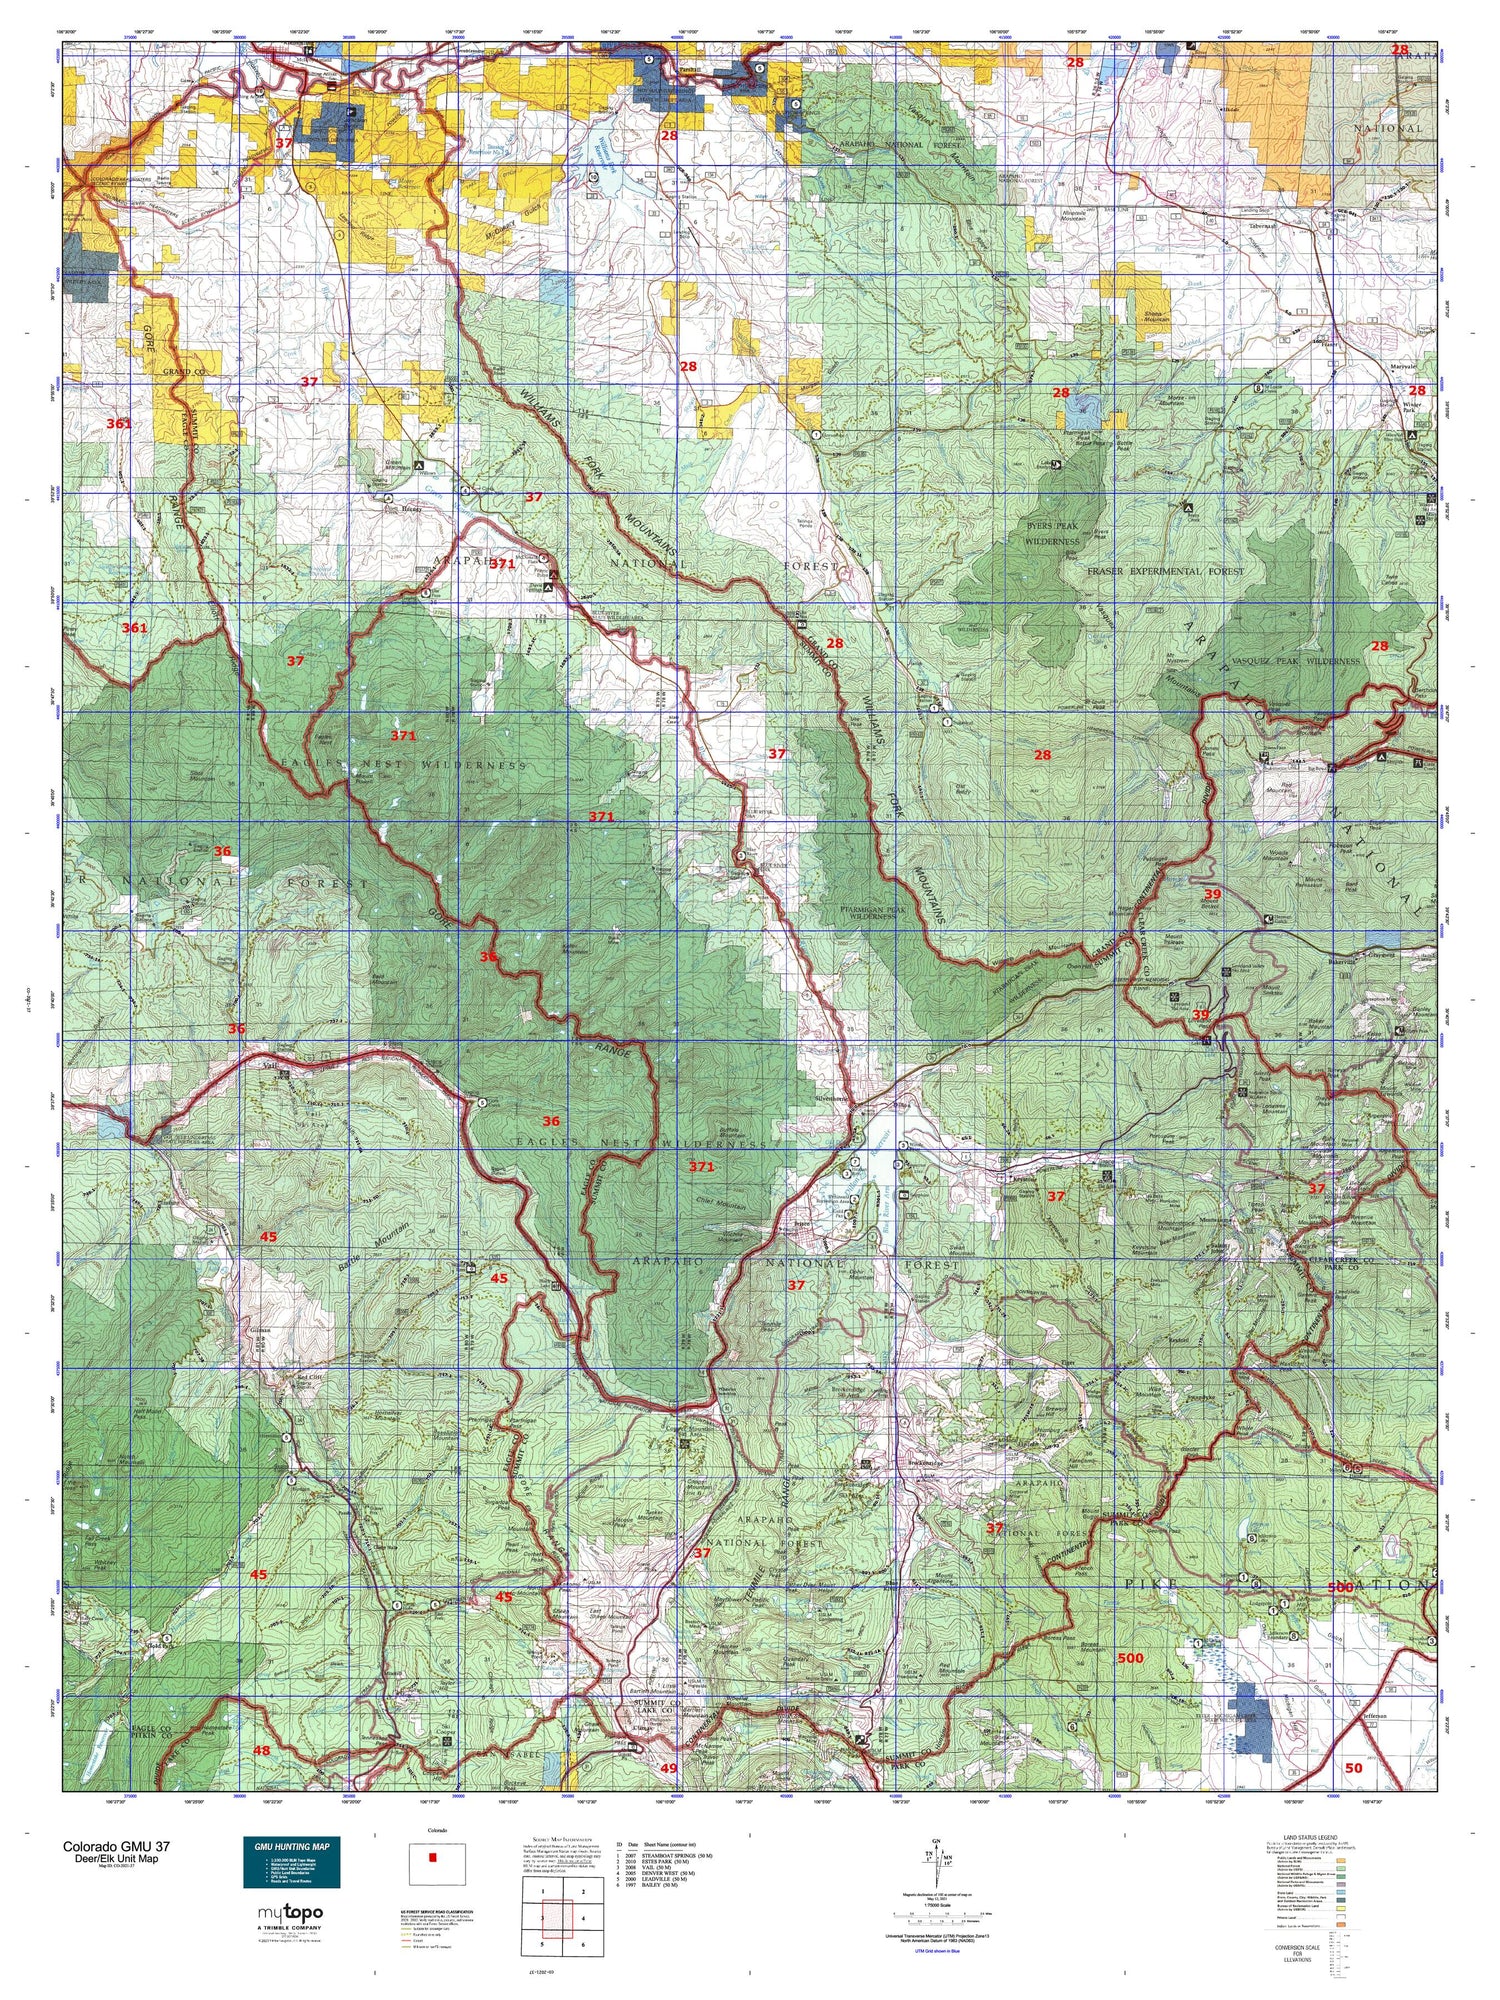 Colorado GMU 37 Map Image